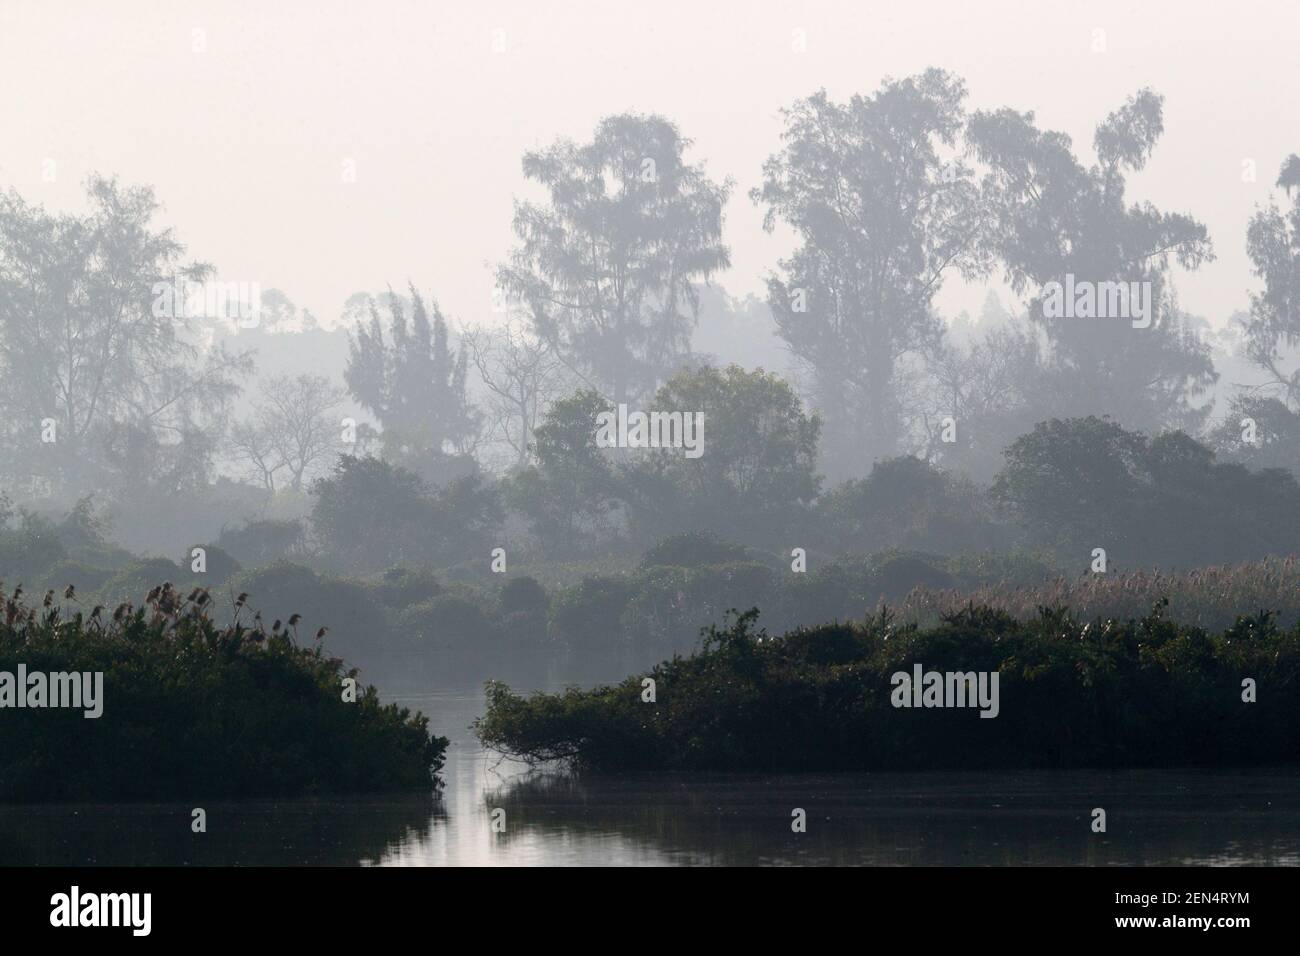 Canne, mangrovie e casuarina, Stagno 7, mai po Riserva Naturale, nuovi territori, Hong Kong 15 febbraio 2021 Foto Stock